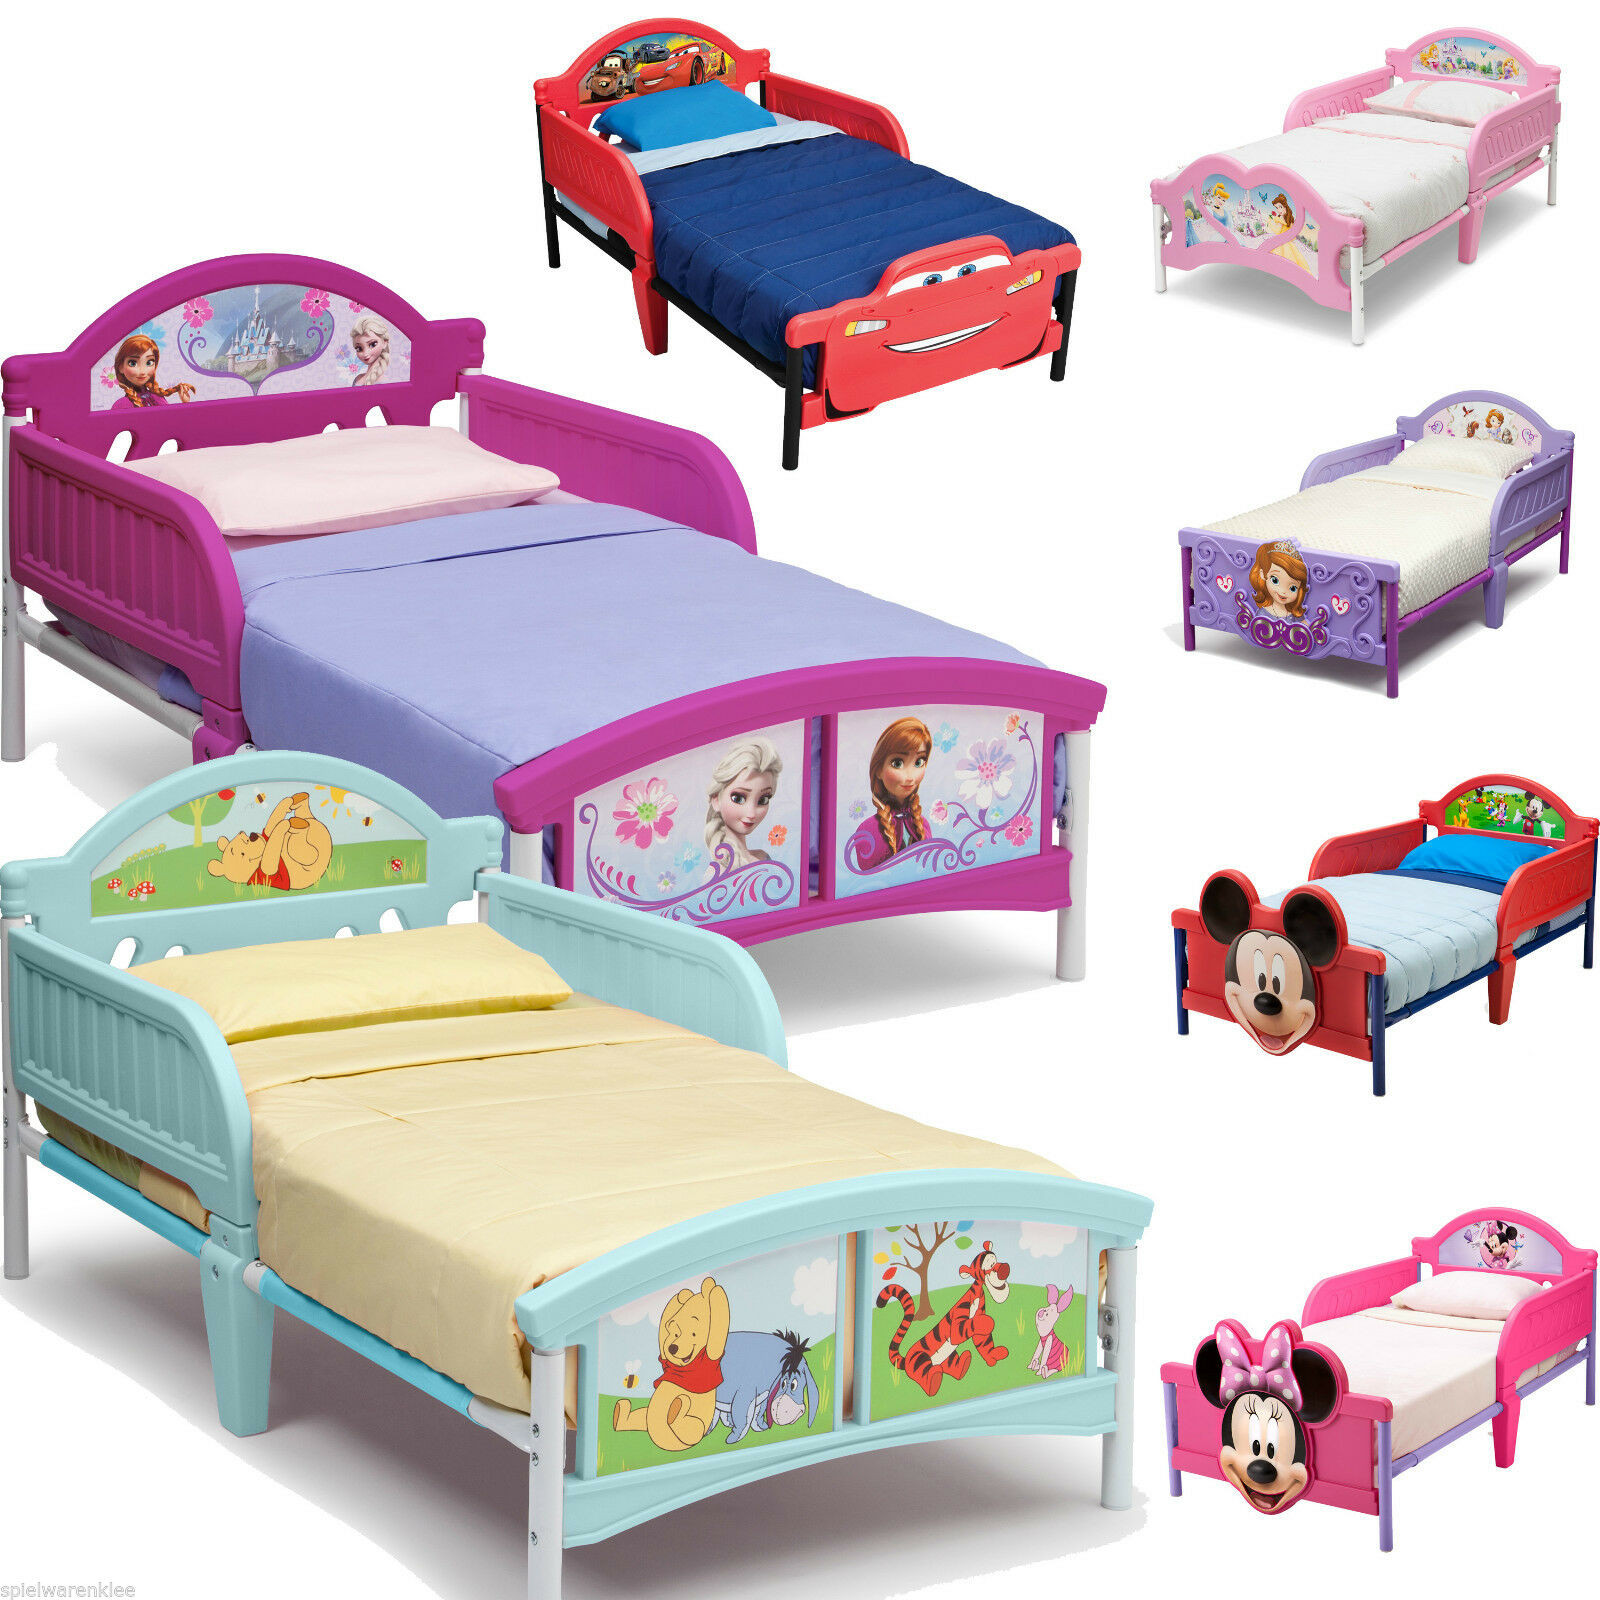 Bett 140x70
 Disney Bett 140x70 Kinderbett Kindermöbel Frozen cars